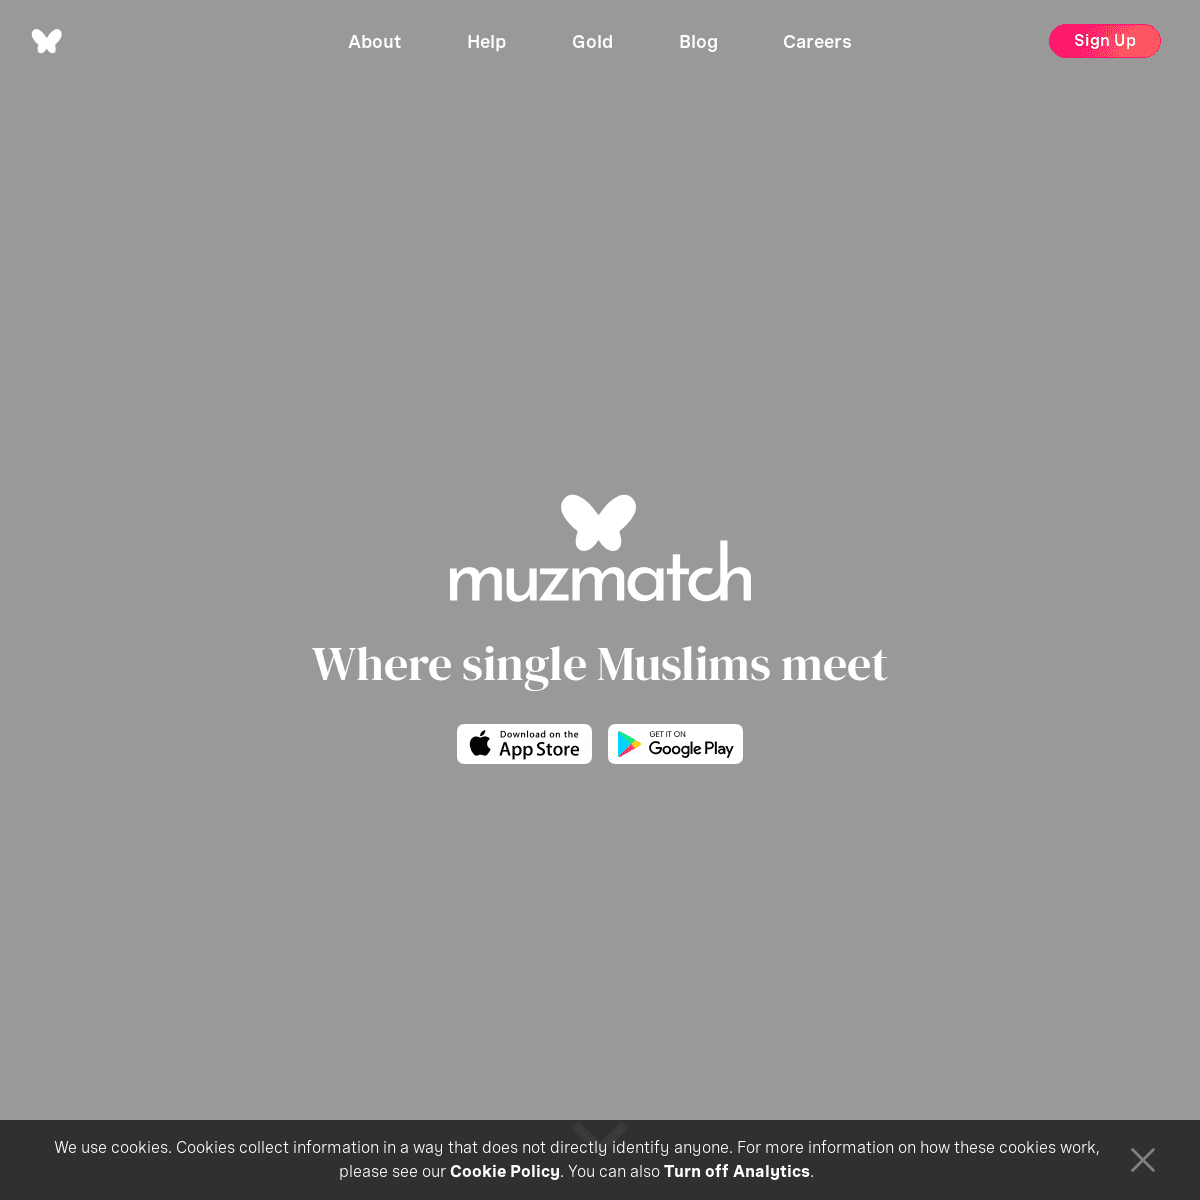 A complete backup of muzmatch.com